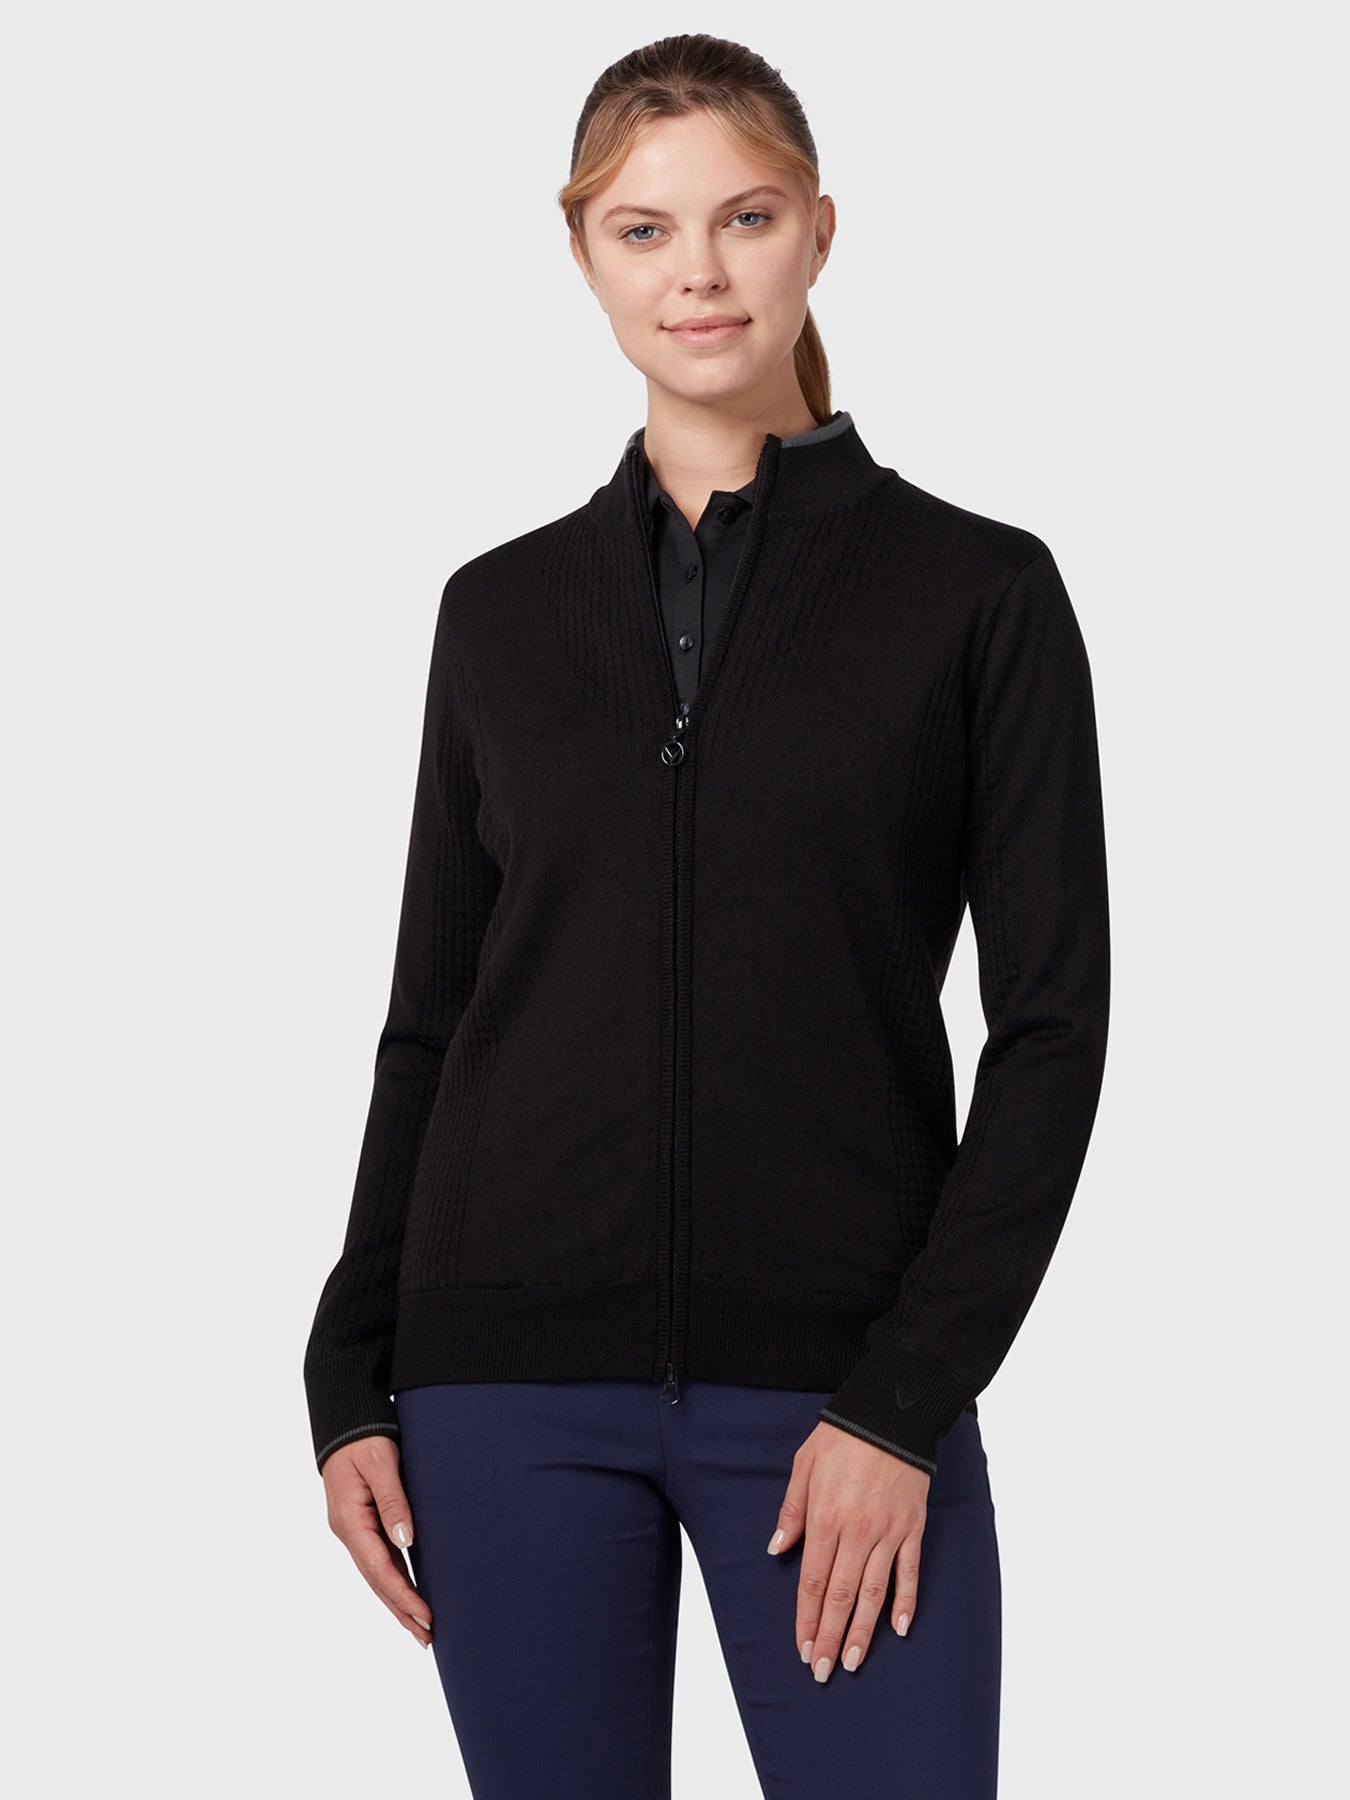 View Lined Windstopper FullZip Womens Sweater In Black Ink Black Ink XL information